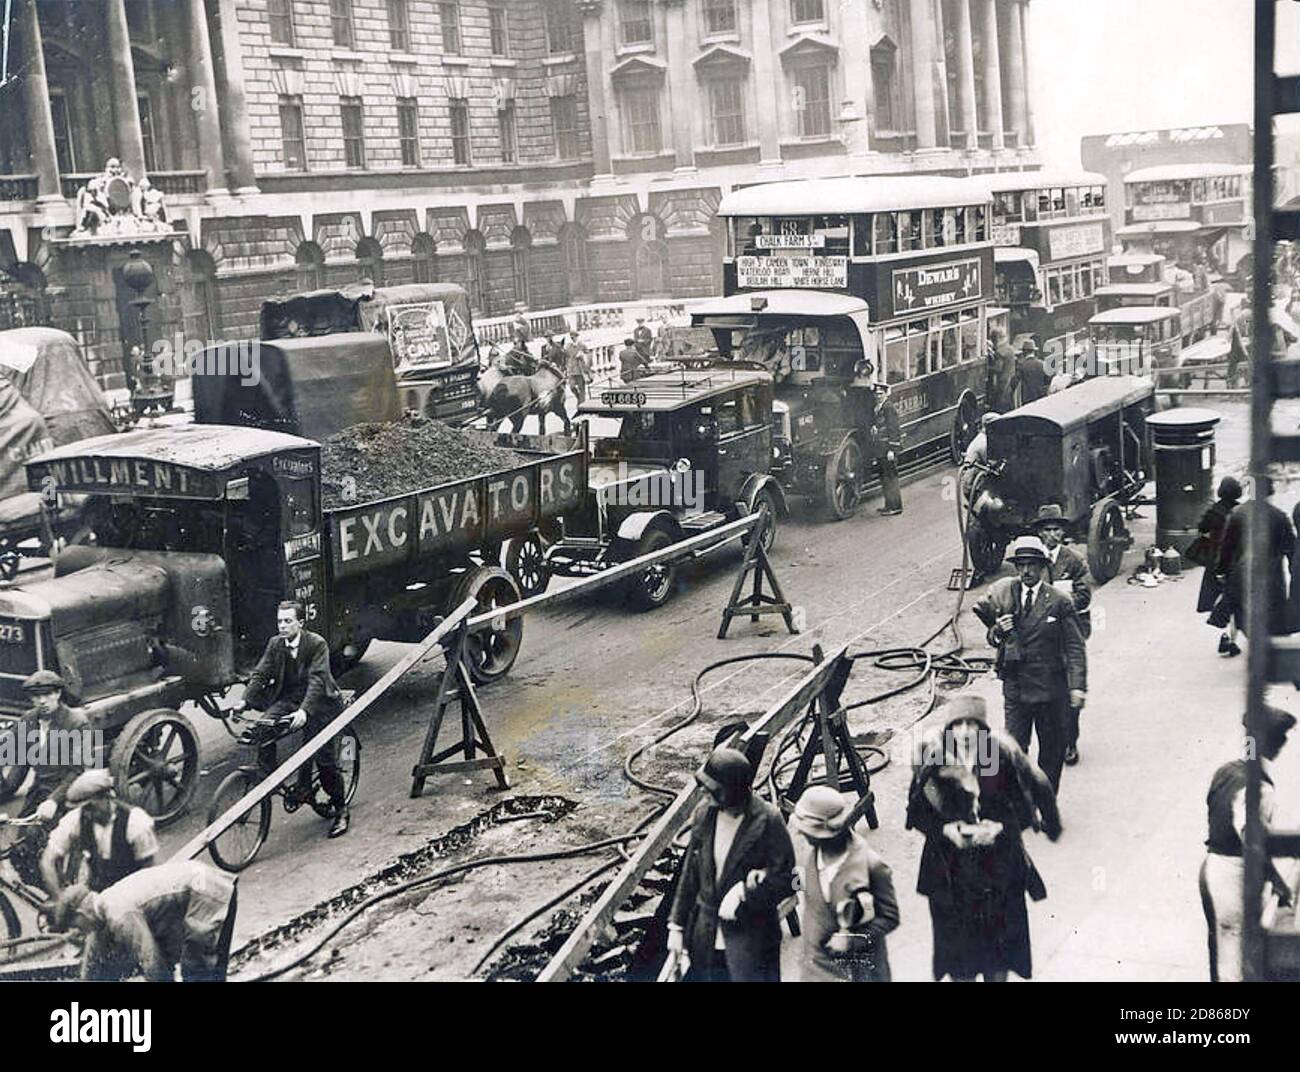 TRAFFIC JAM ON WATERLOO BRIDGE, London, 1930 Stock Photo